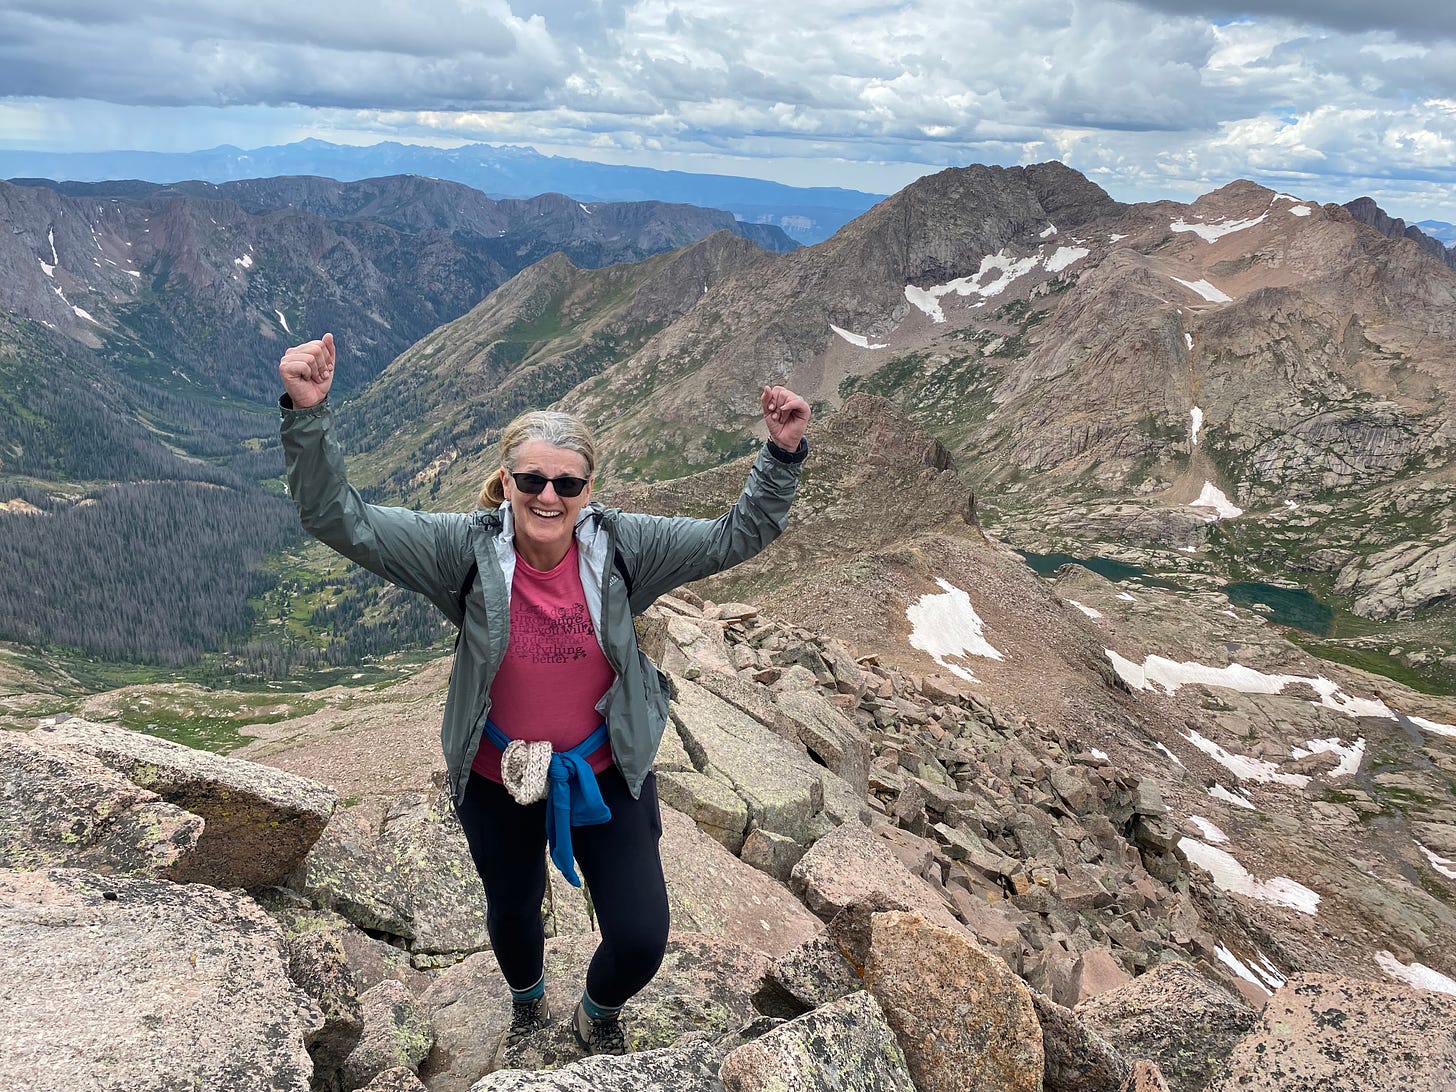 Stacy upon summit of Windhom Peak